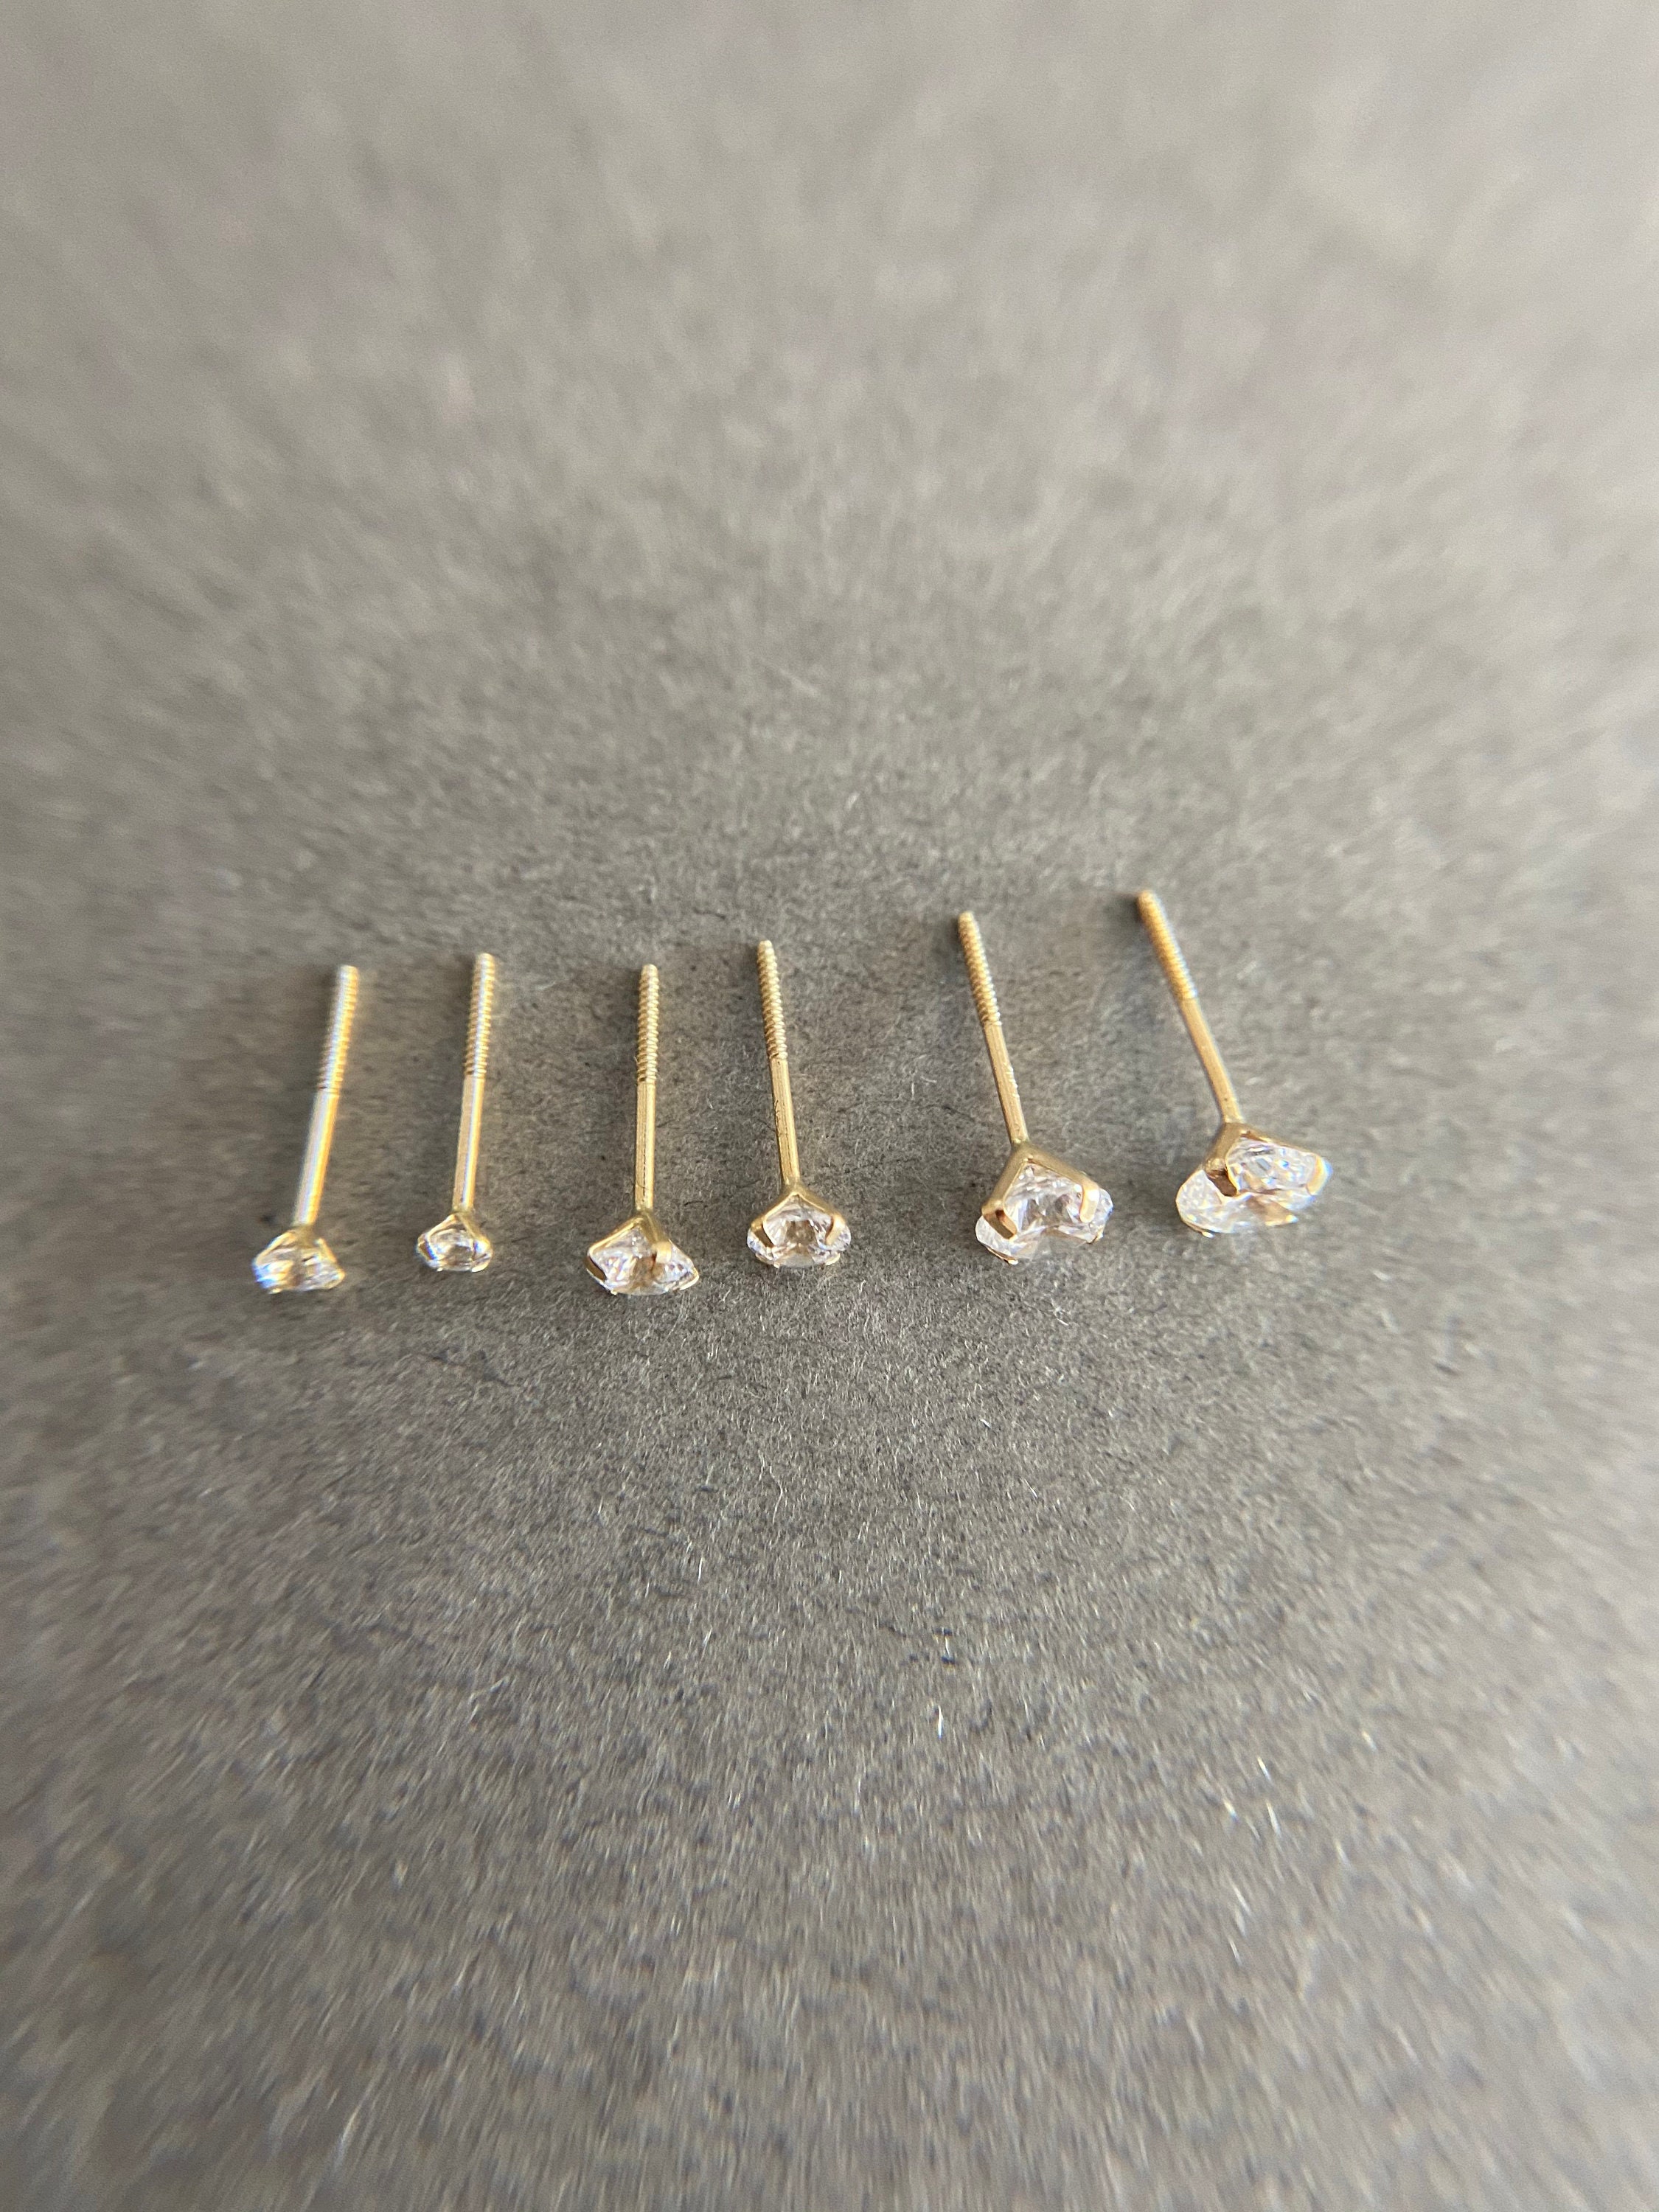 Teeny Tiny Heart Studs, 3mm Clear CZ Baby/Children's Earrings, Screw Back - 14K Gold